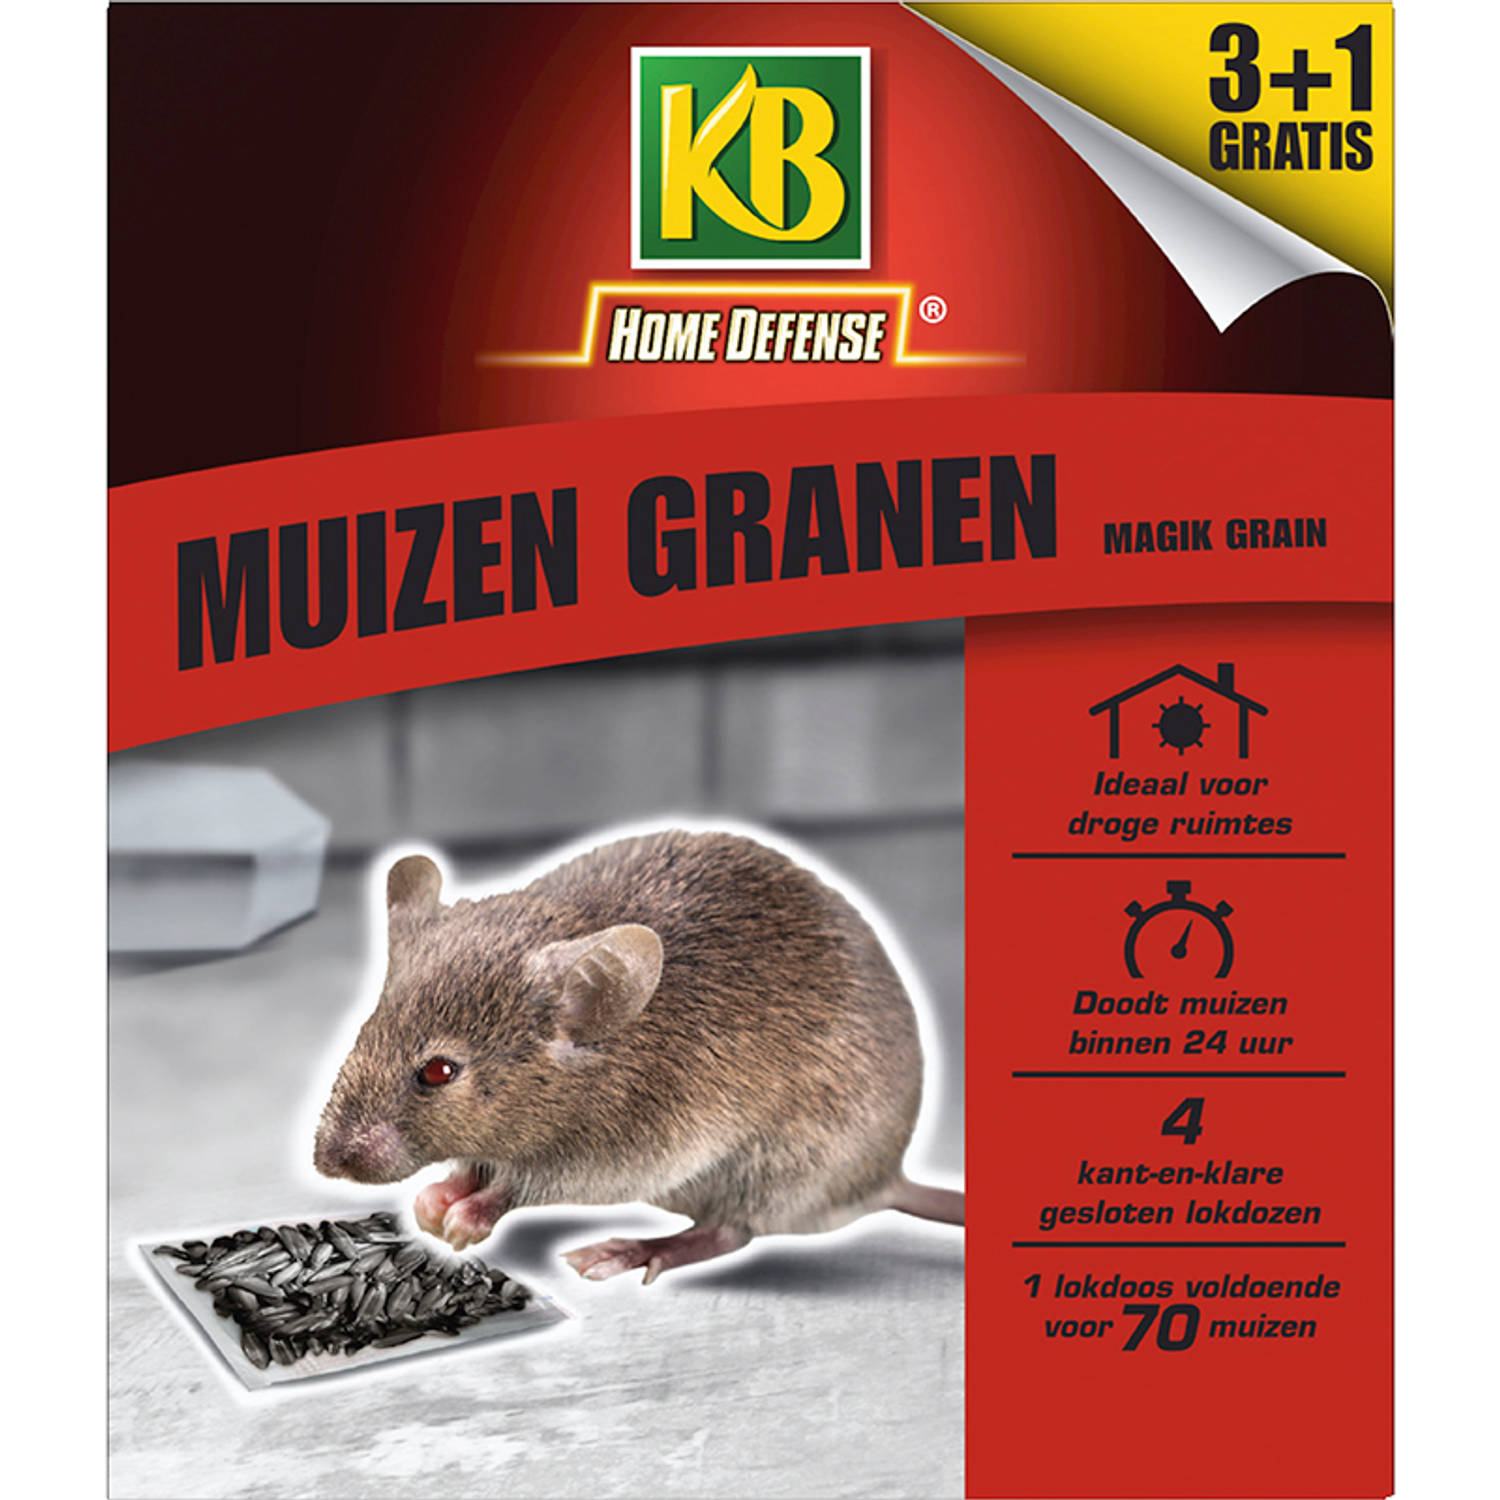 KB Home Defense Muizen Granen Alfachloralose Kant-en-Klare Lokdoos Magik Grain 4 stuks